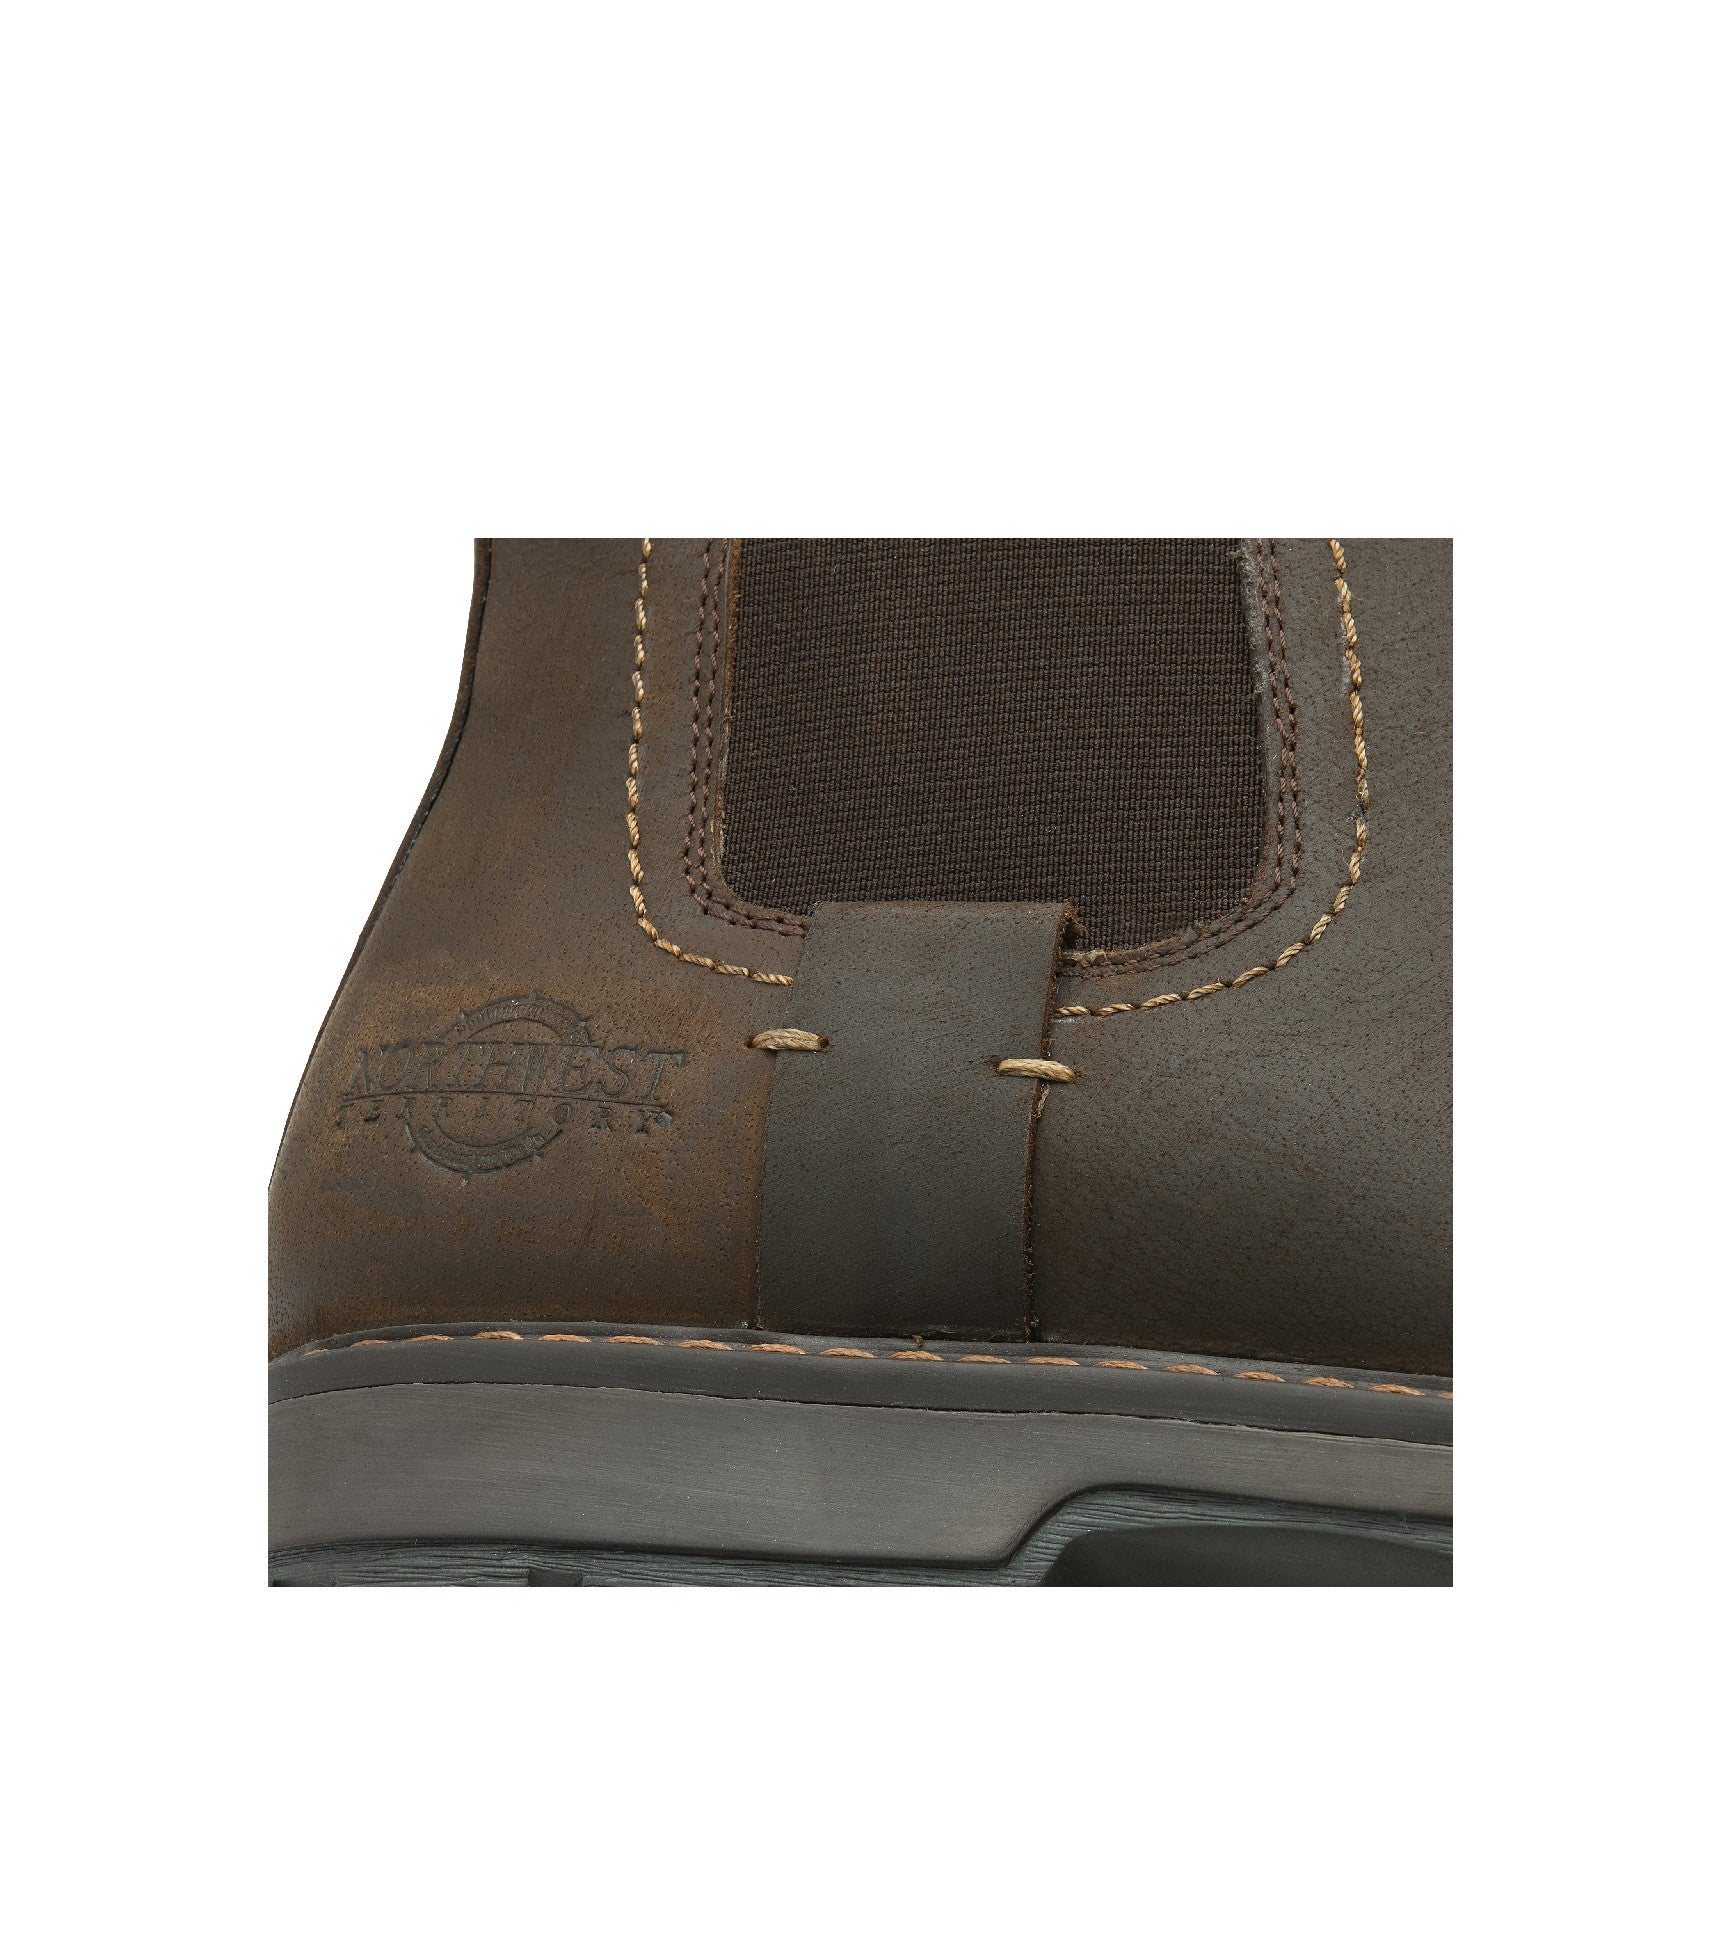 Men's Leather Waterproof Walking Chelsea Boots - #colour_waxy-brown